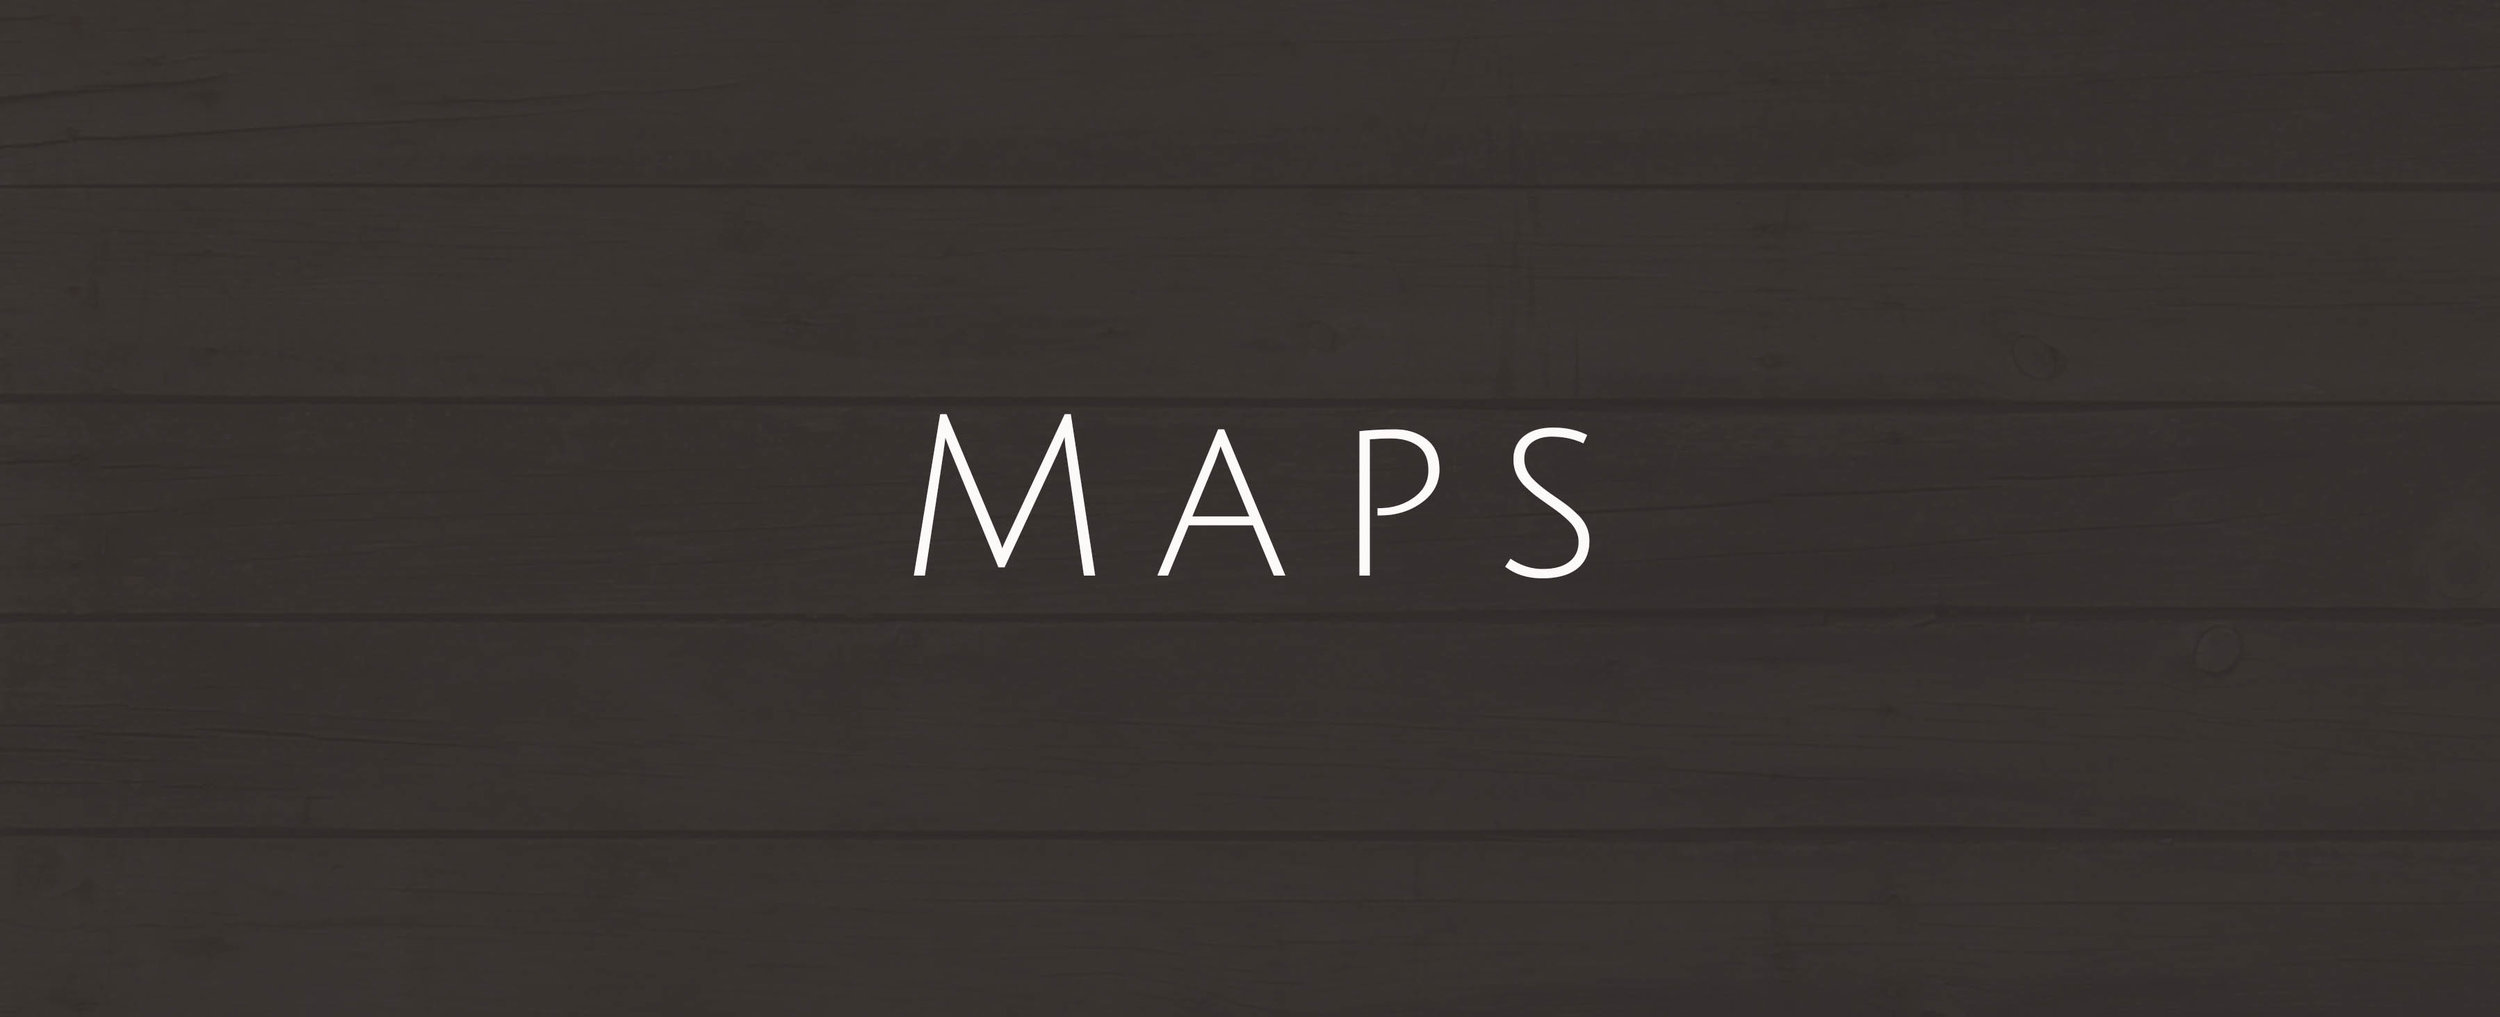 All - Maps.jpg